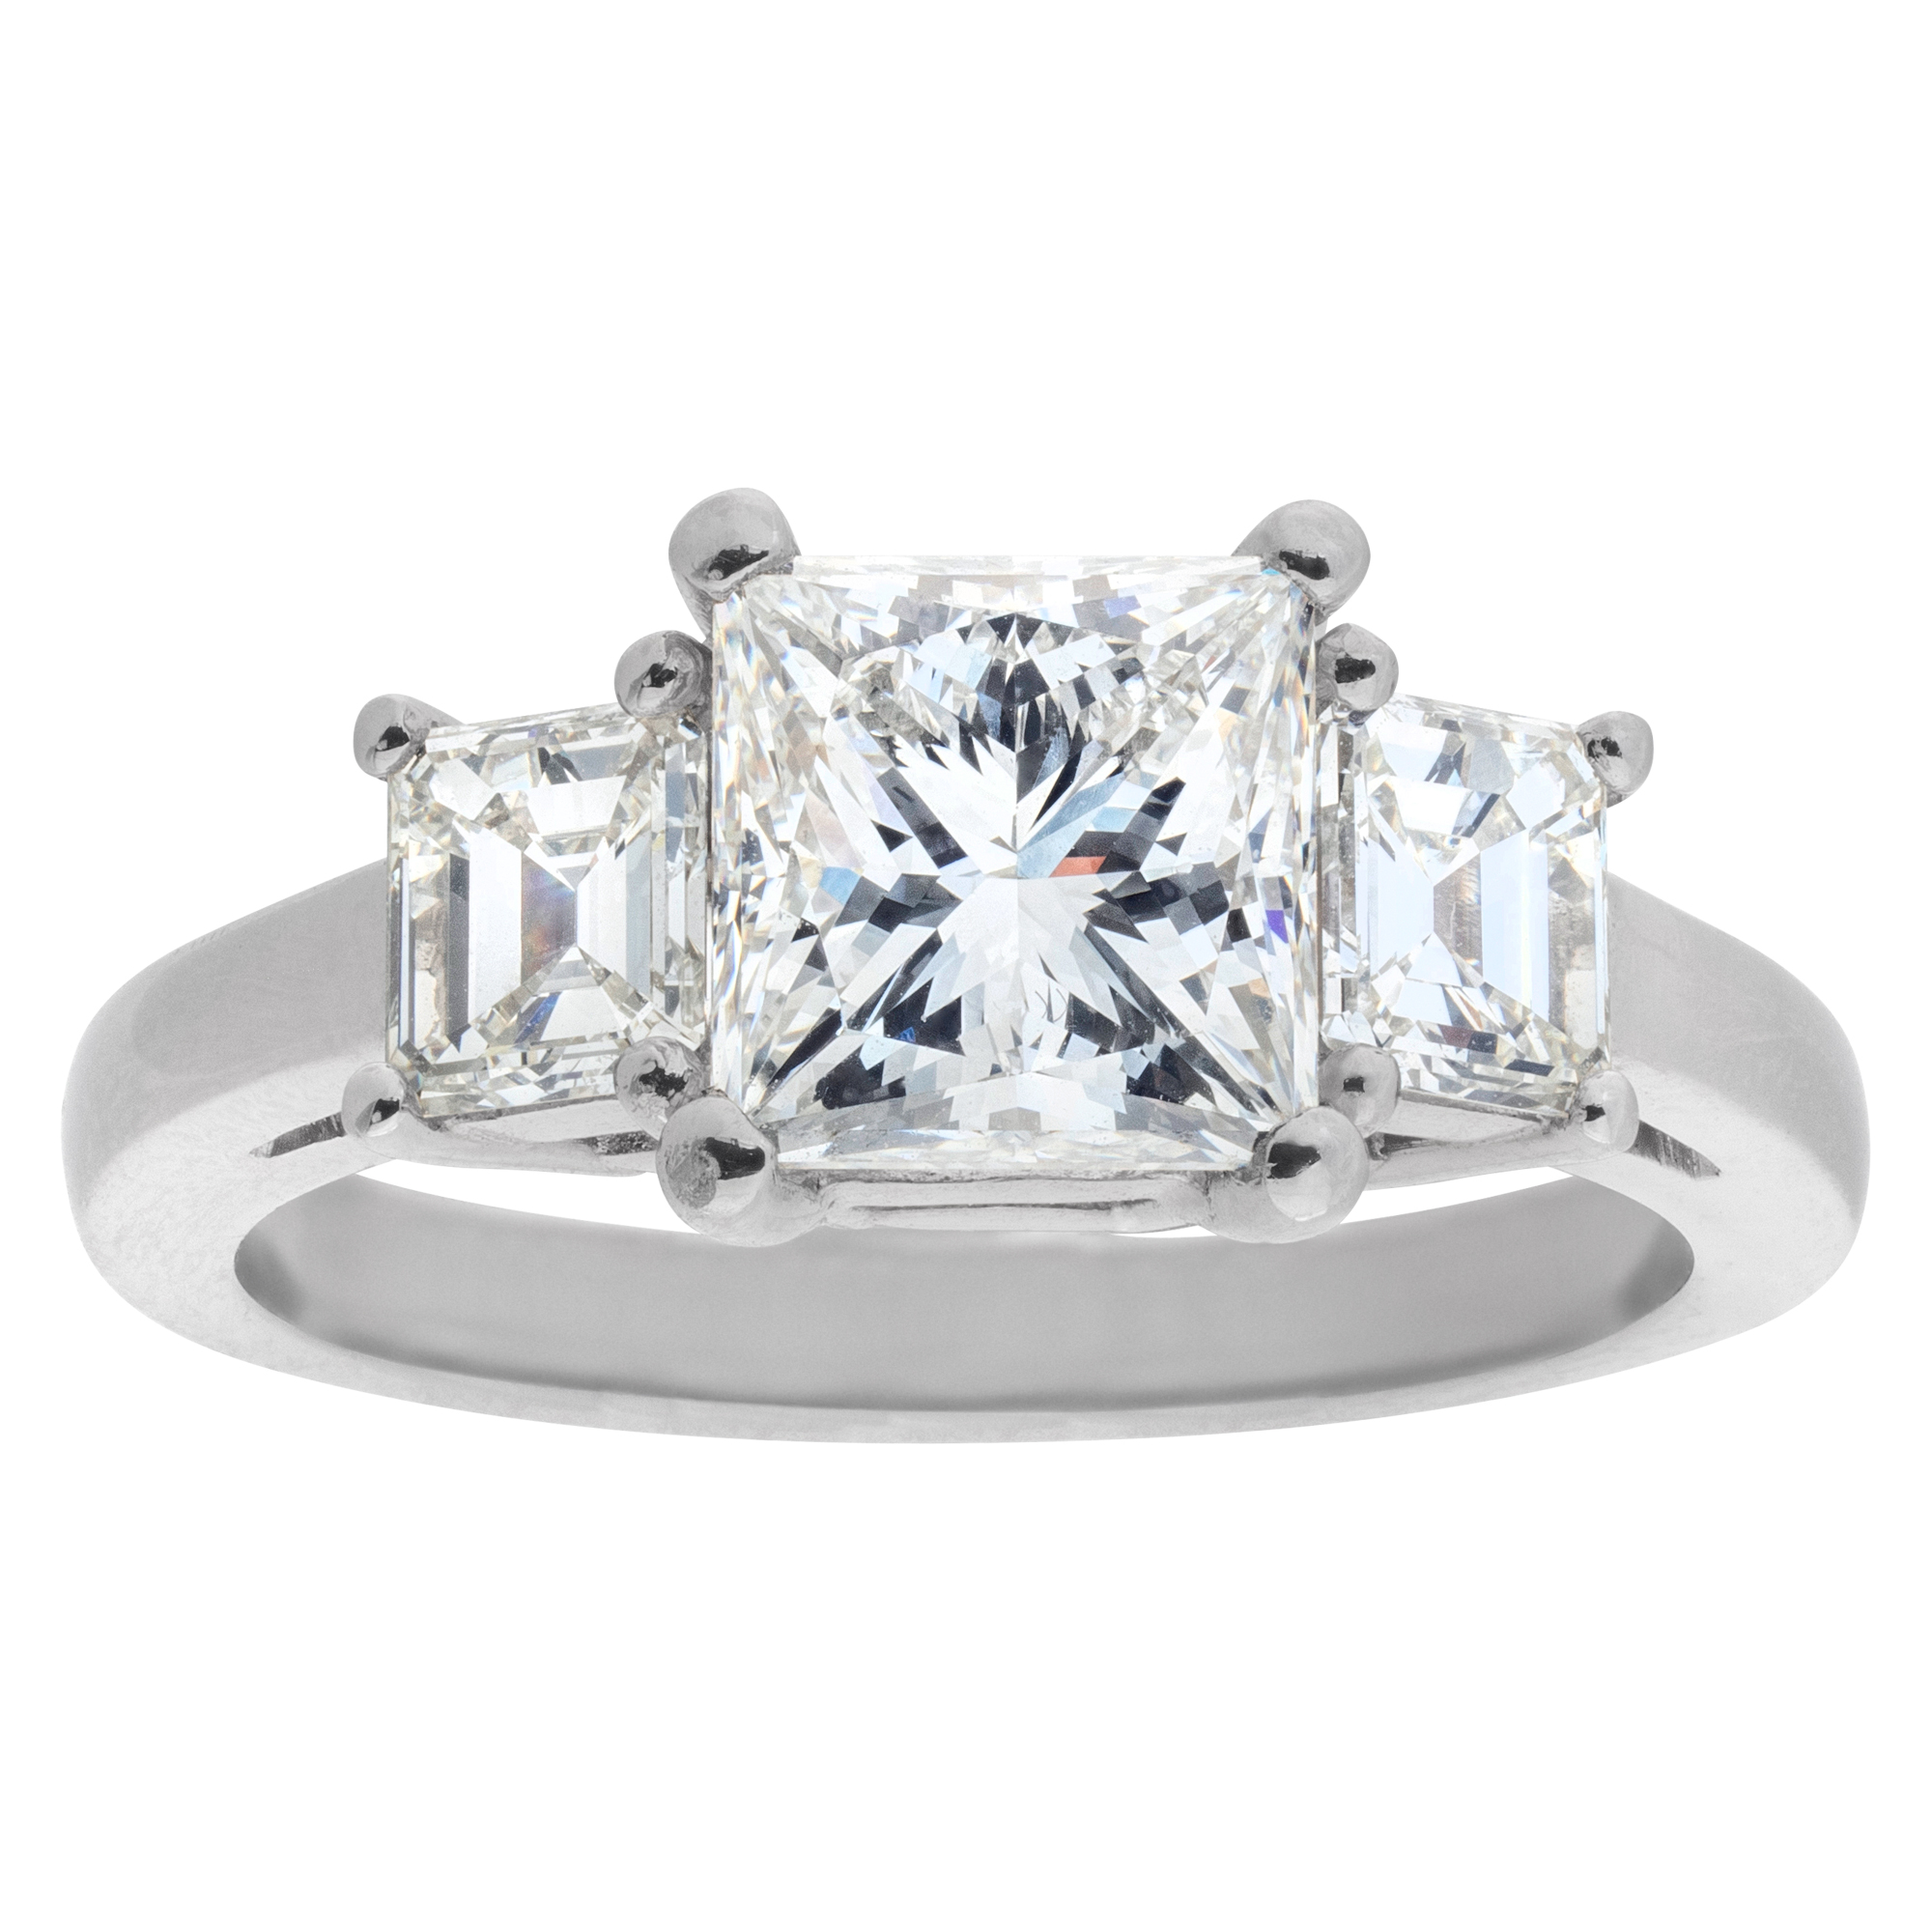 GIA certified square modified brilliant cut diamond 2.03 carat (G color,VS1 clarity) ring image 1